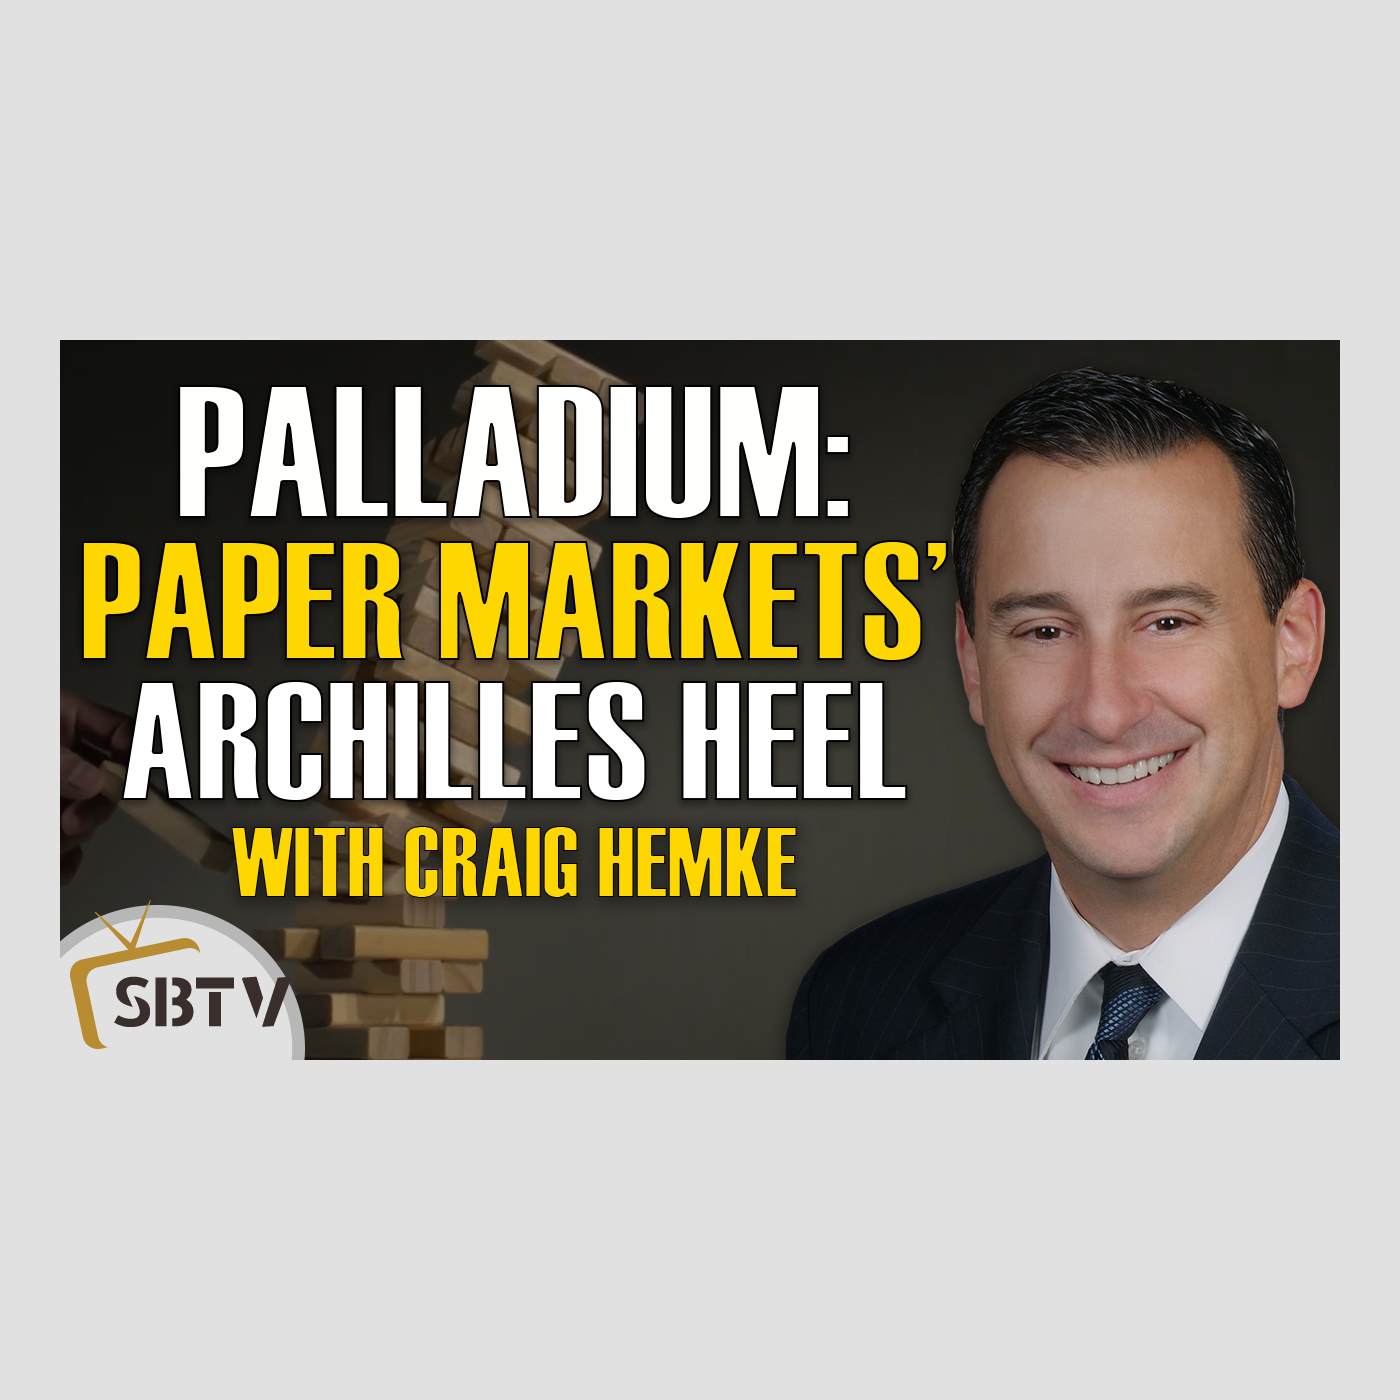 46 Craig Hemke - Watch Palladium Closely: Archilles Heel of the Paper Metals Markets